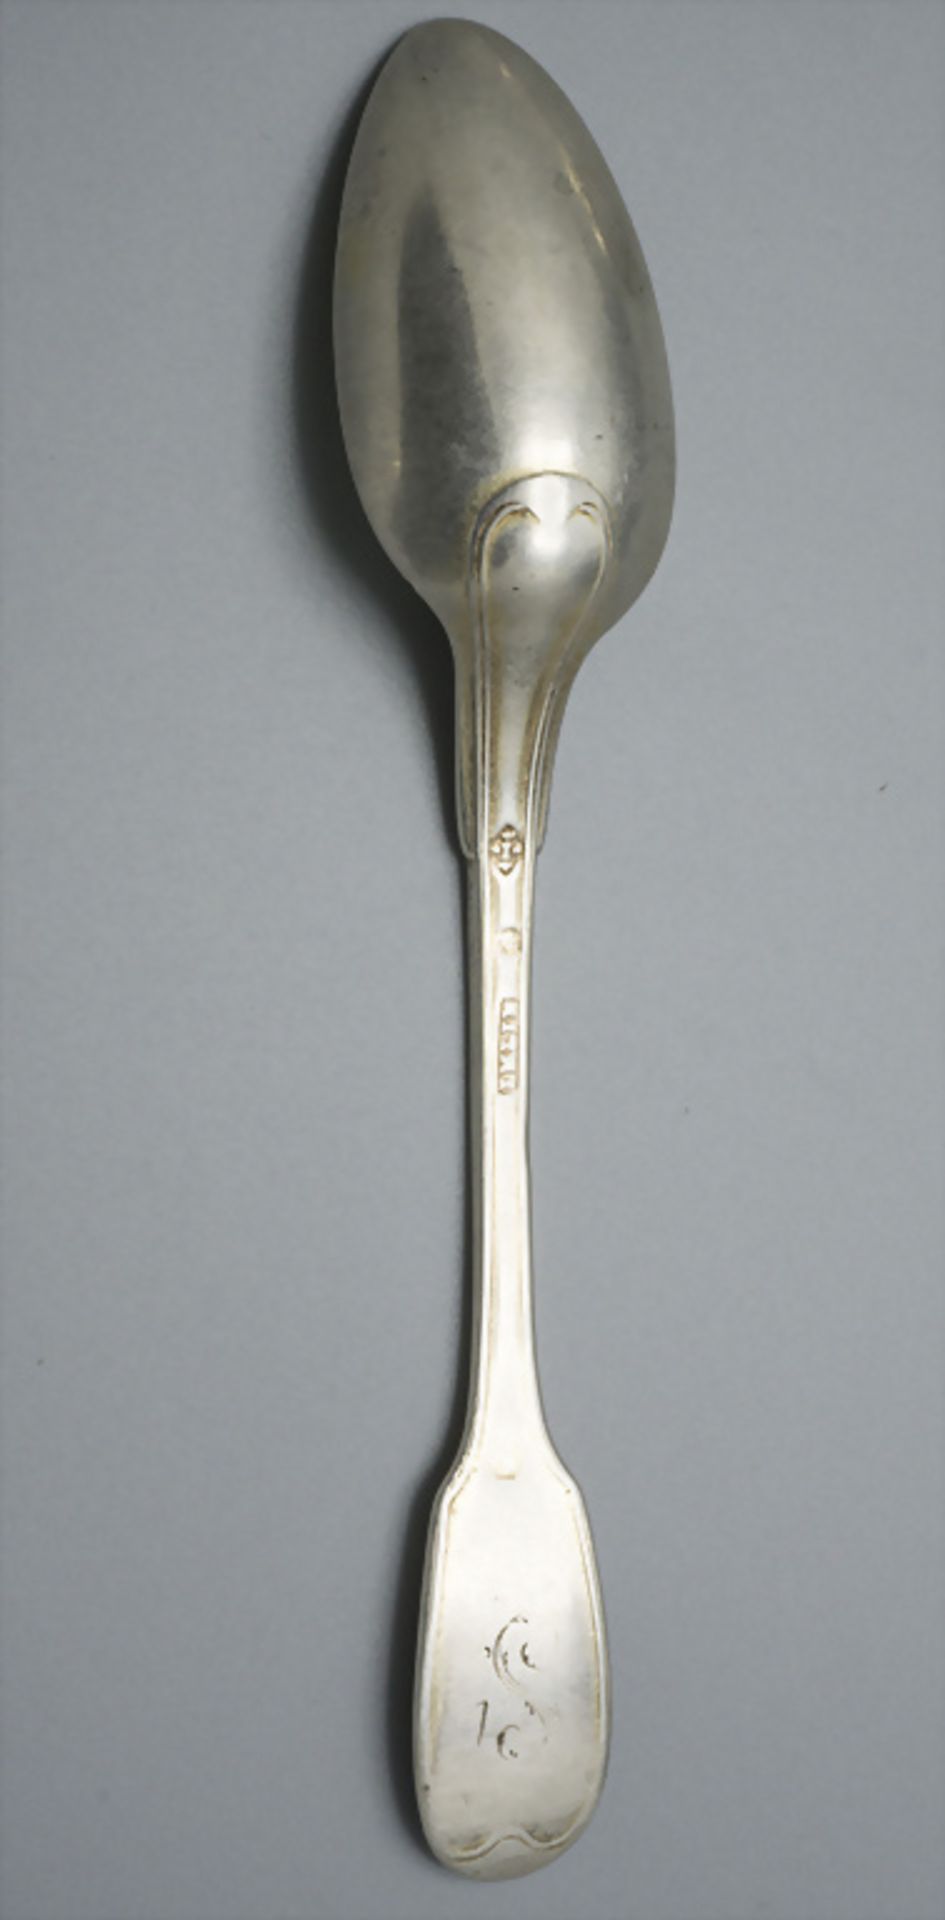 6 Löffel / 6 cuillères en argent massif / 6 silver spoons, Francois Daniel Imlin, Straßburg / ... - Image 4 of 5